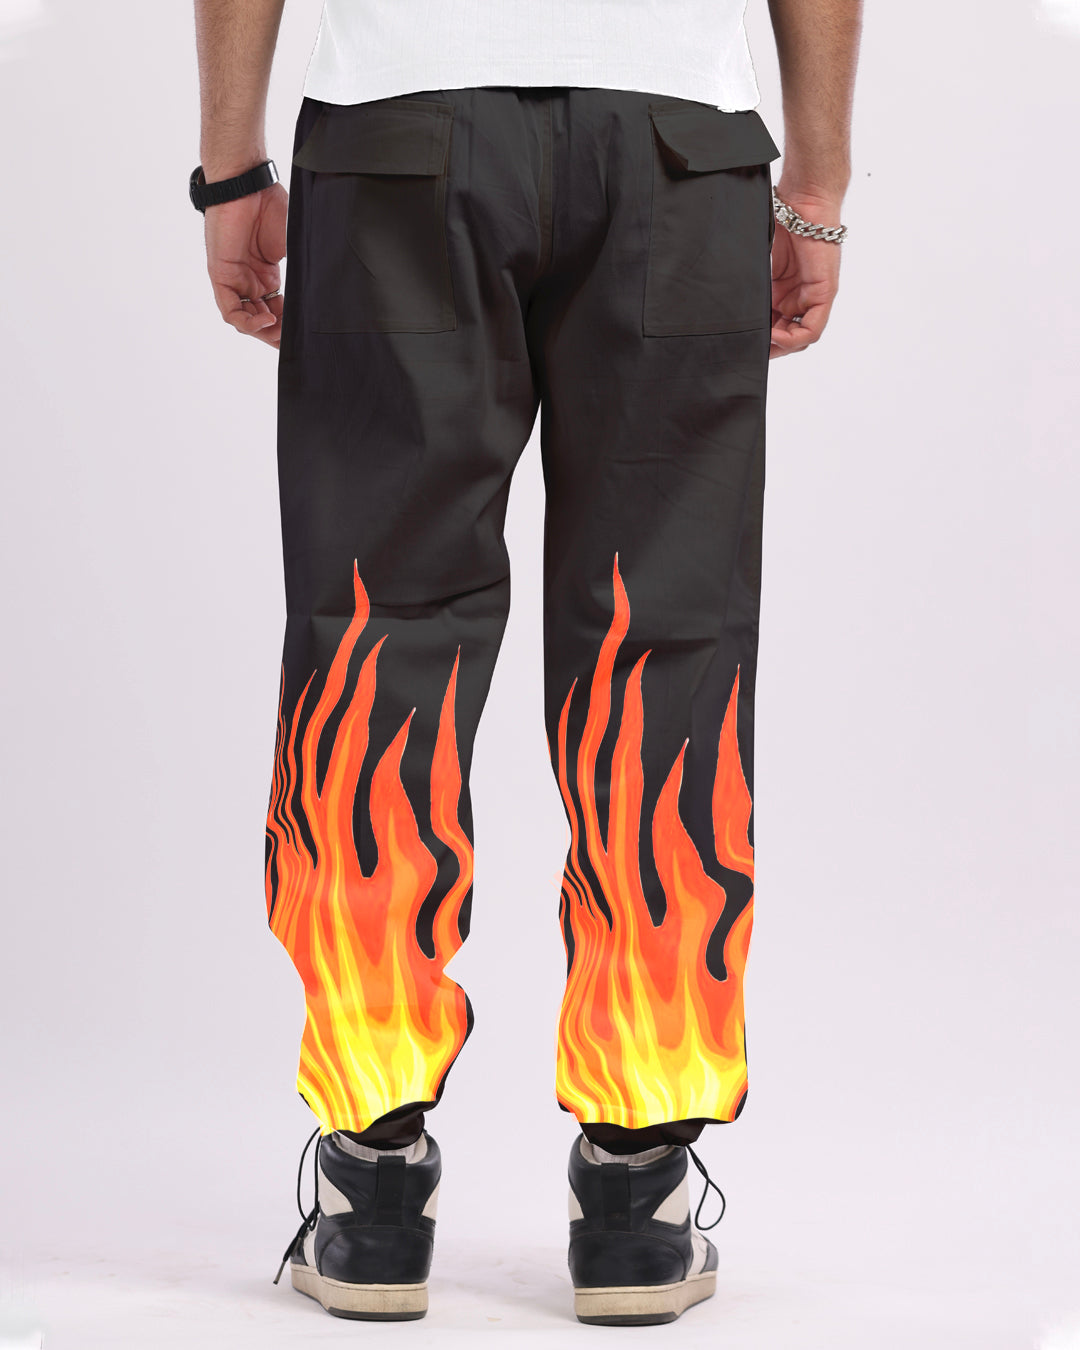 Men's Stylish Black Cargo Pants - Fire Design